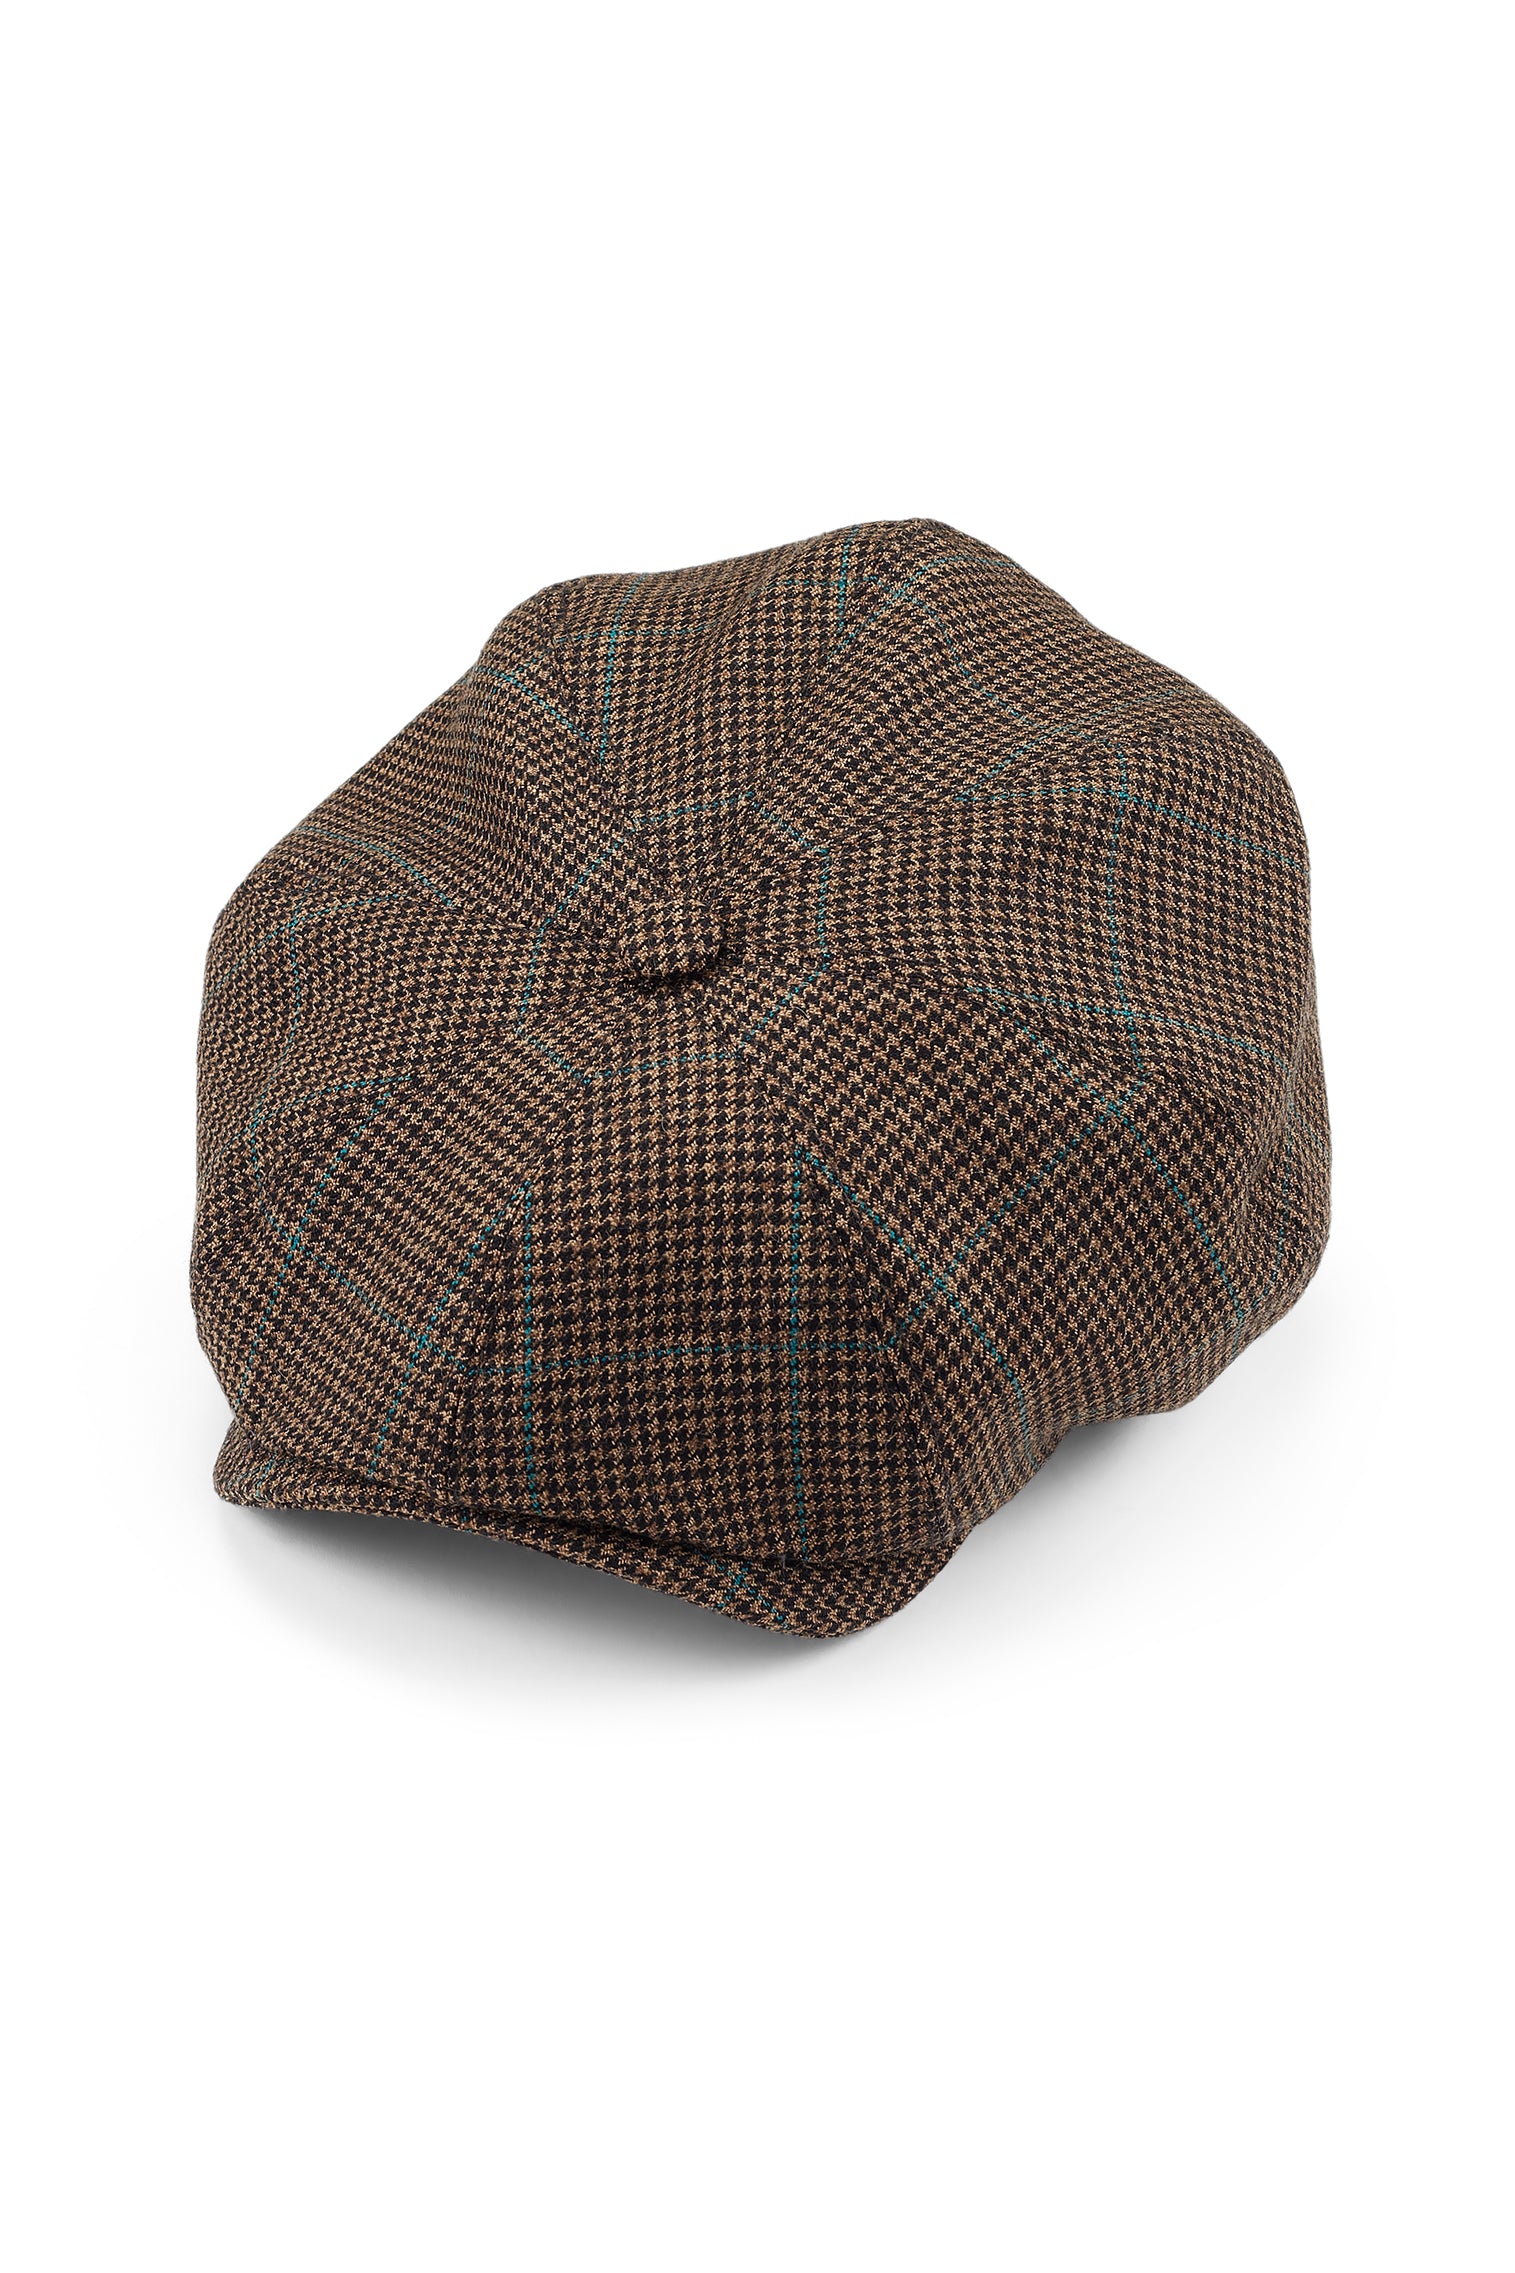 Highgrove Brown Bakerboy Cap - Men's Hats - Lock & Co. Hatters London UK